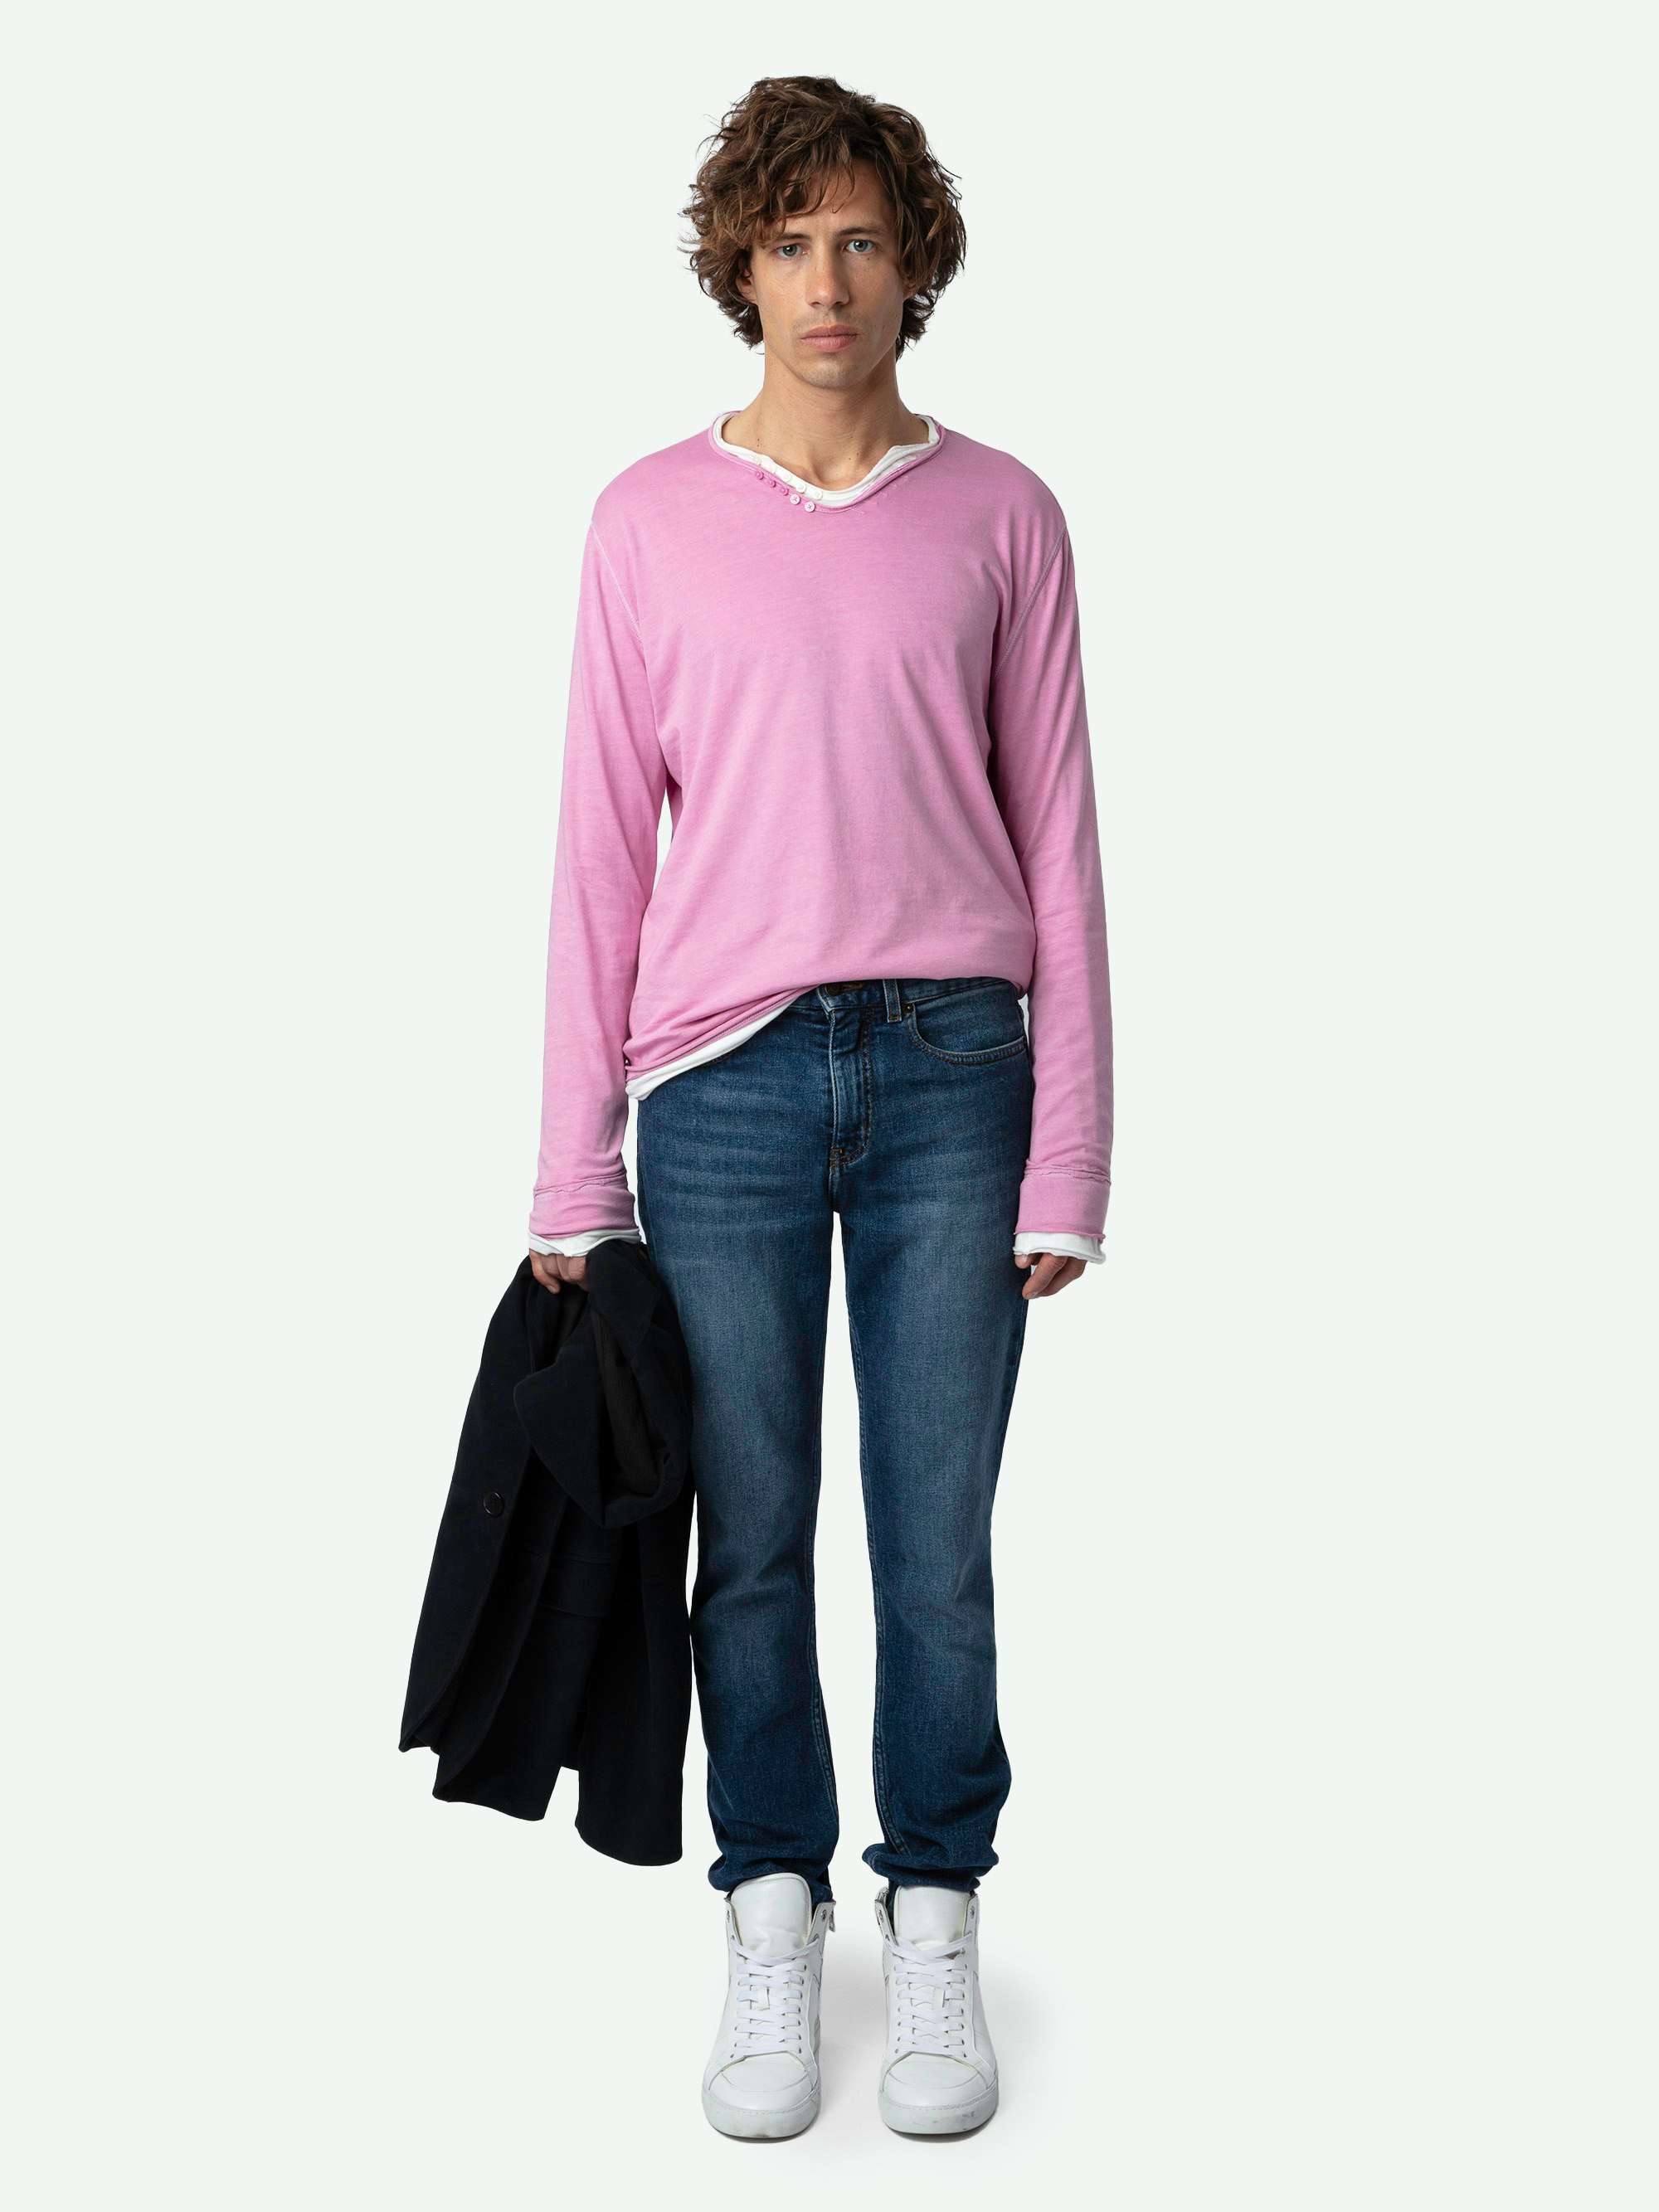 Monastir Henley T-shirt - Long-sleeved pink organic cotton Henley T-shirt with Greta poem print on the back.